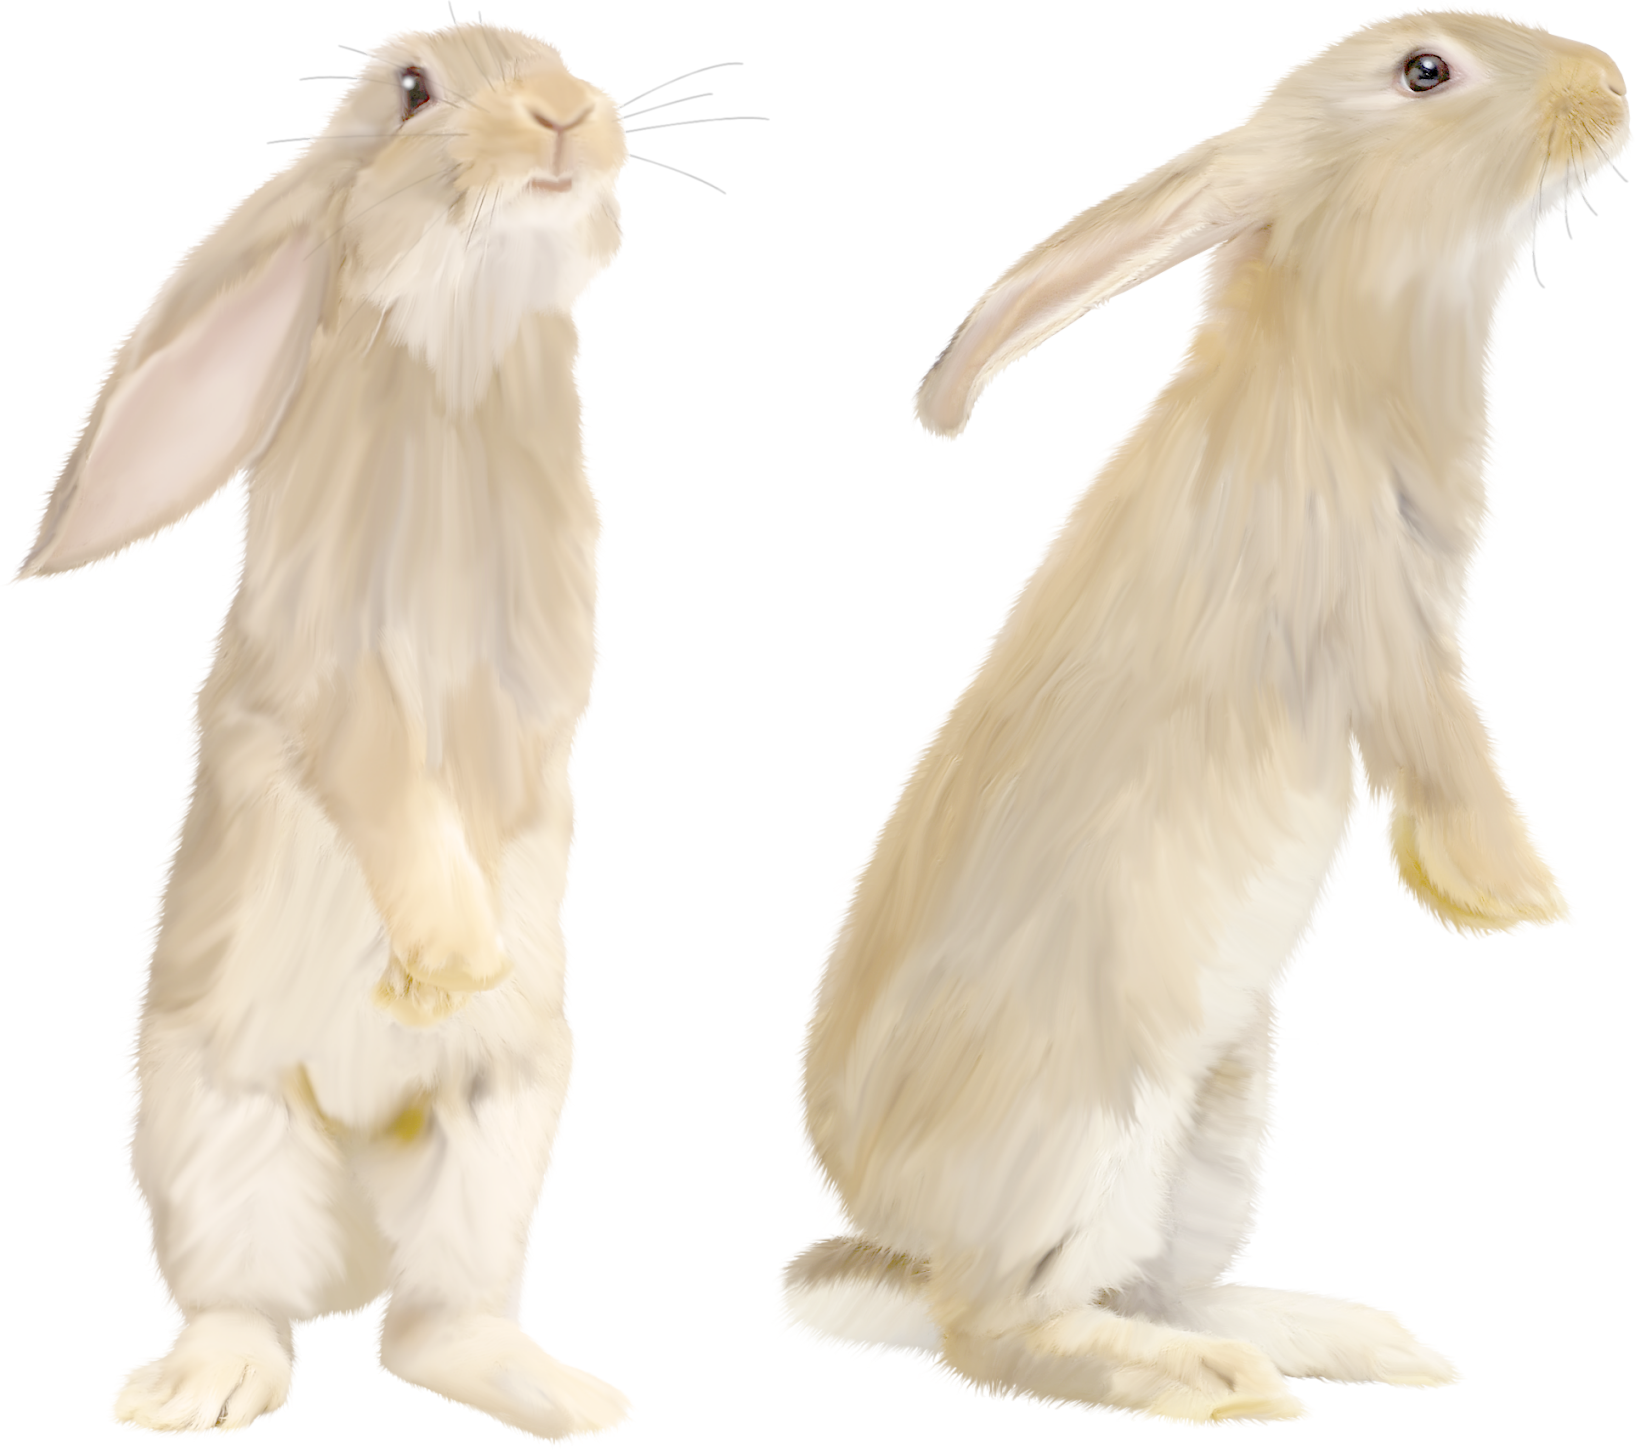 White rabbit PNG image